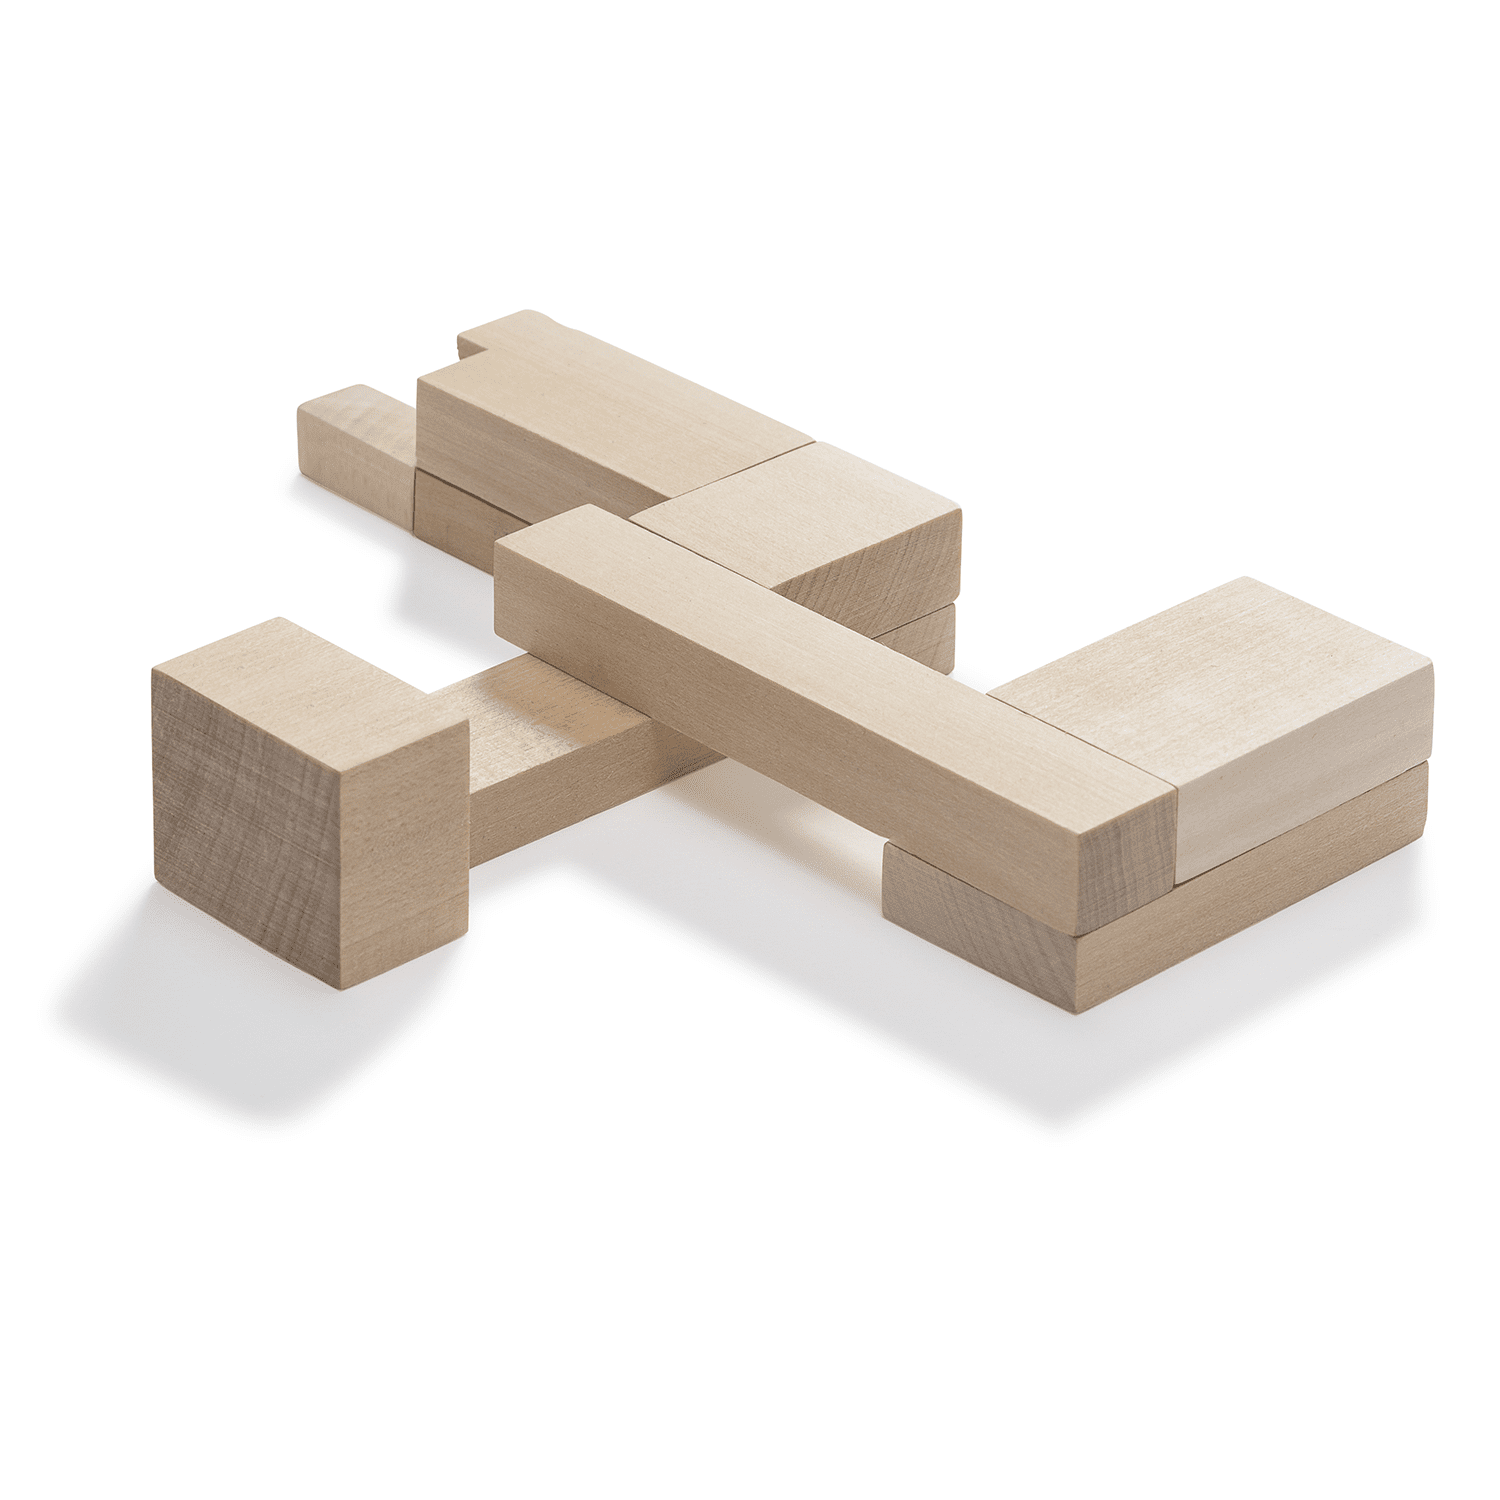 Afbeelding van Bauhaus Dessau Building Puzzle